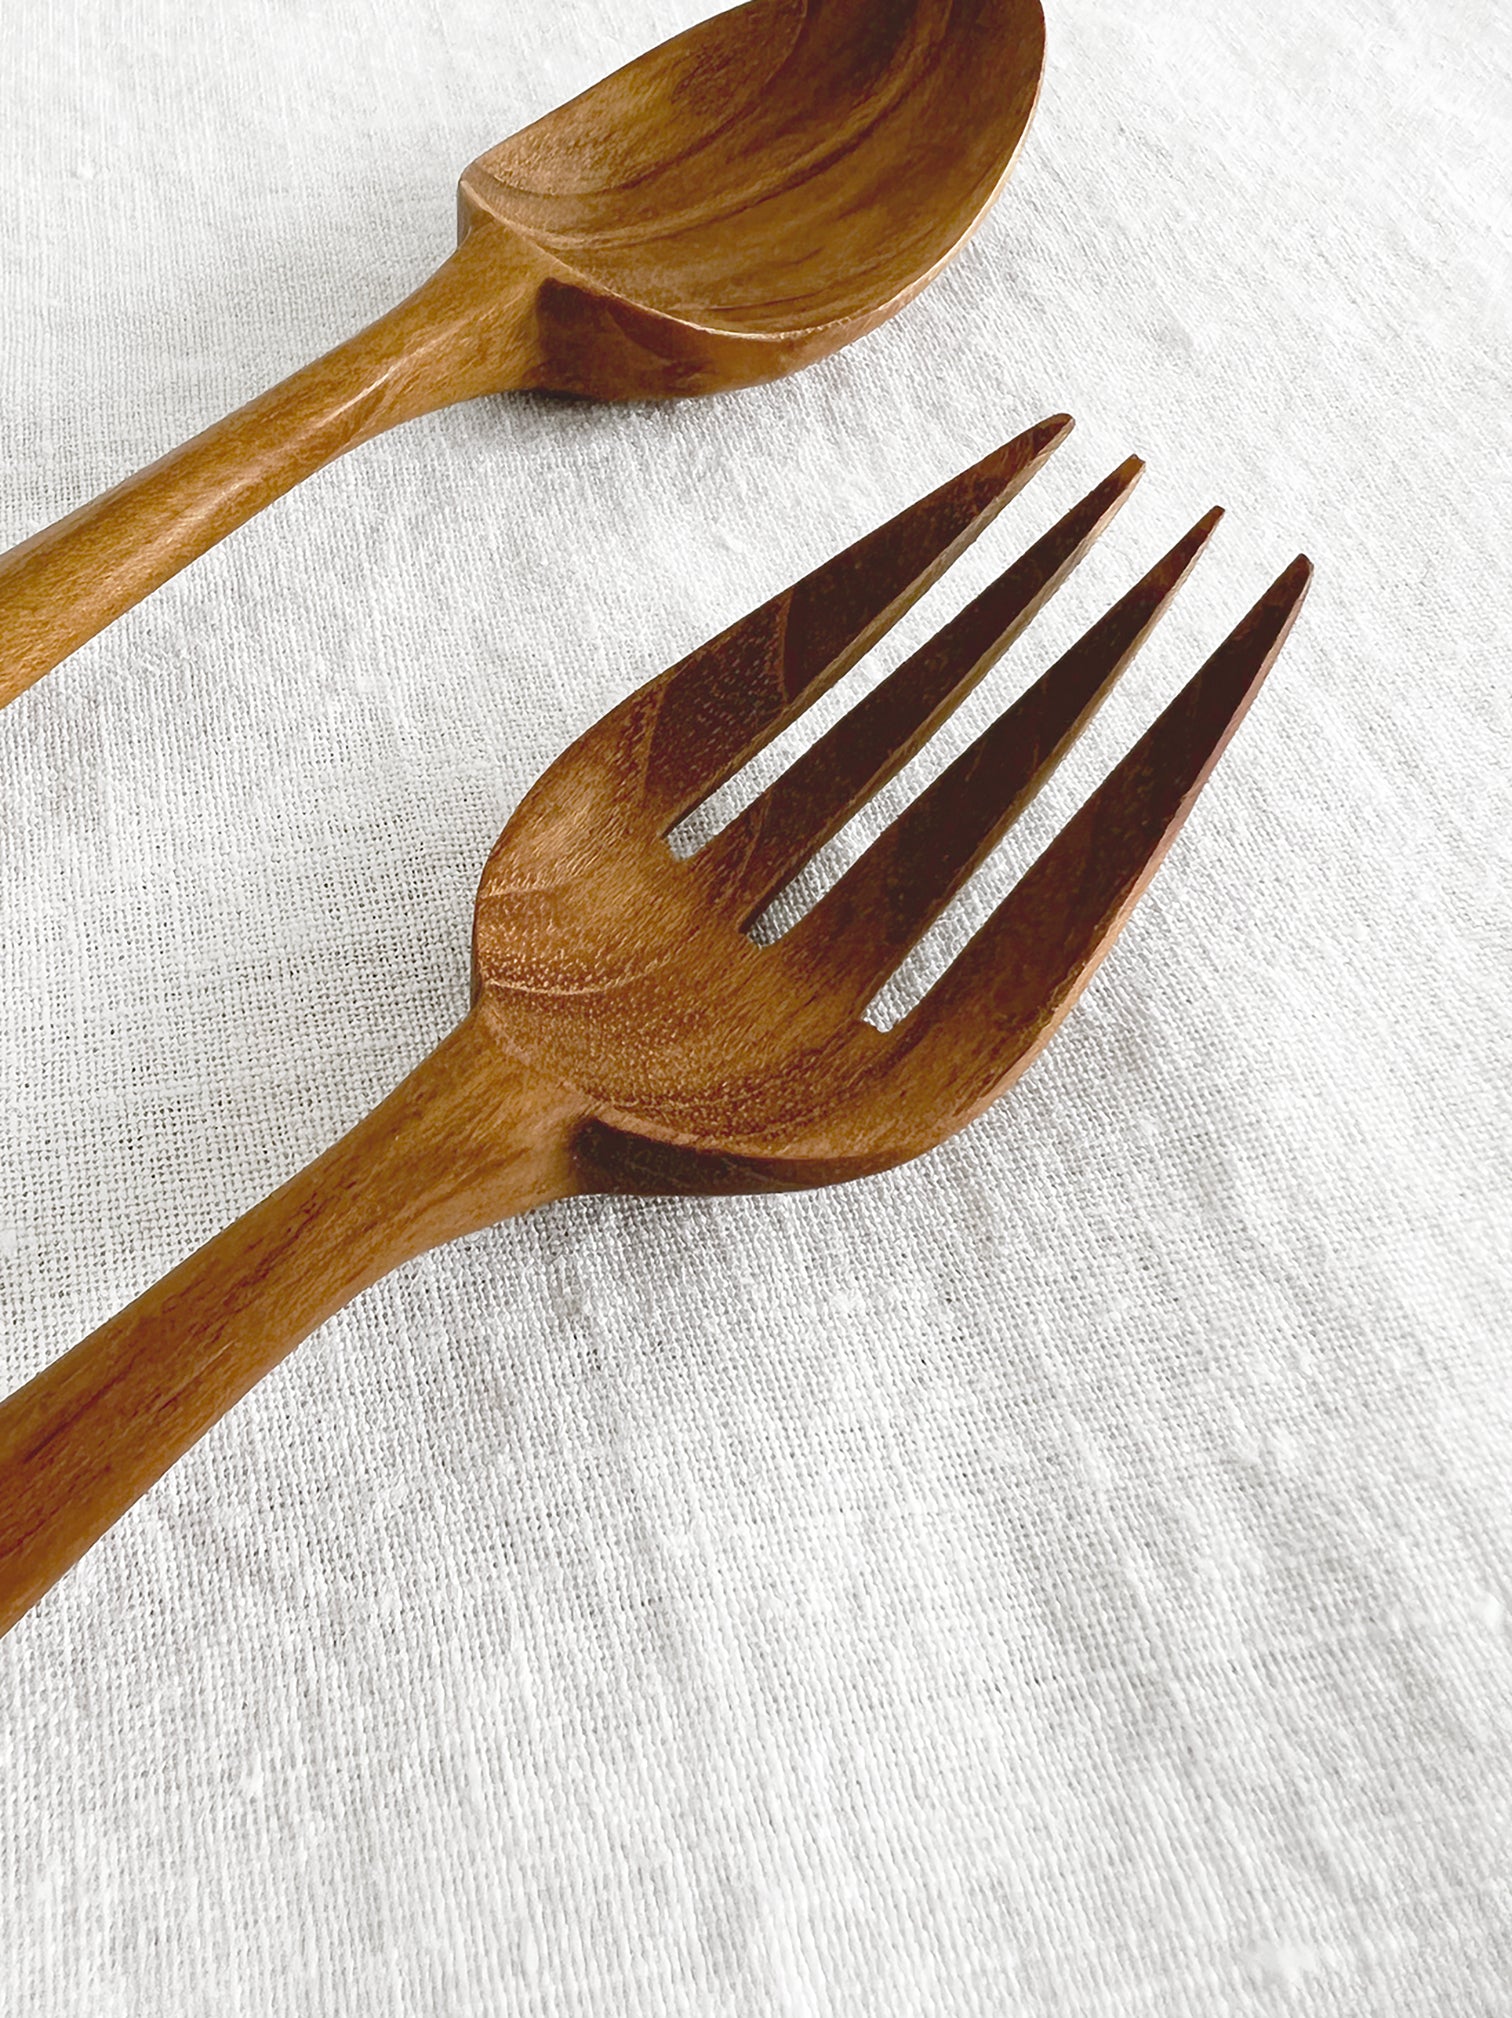 Wooden Fork & Spoon Set